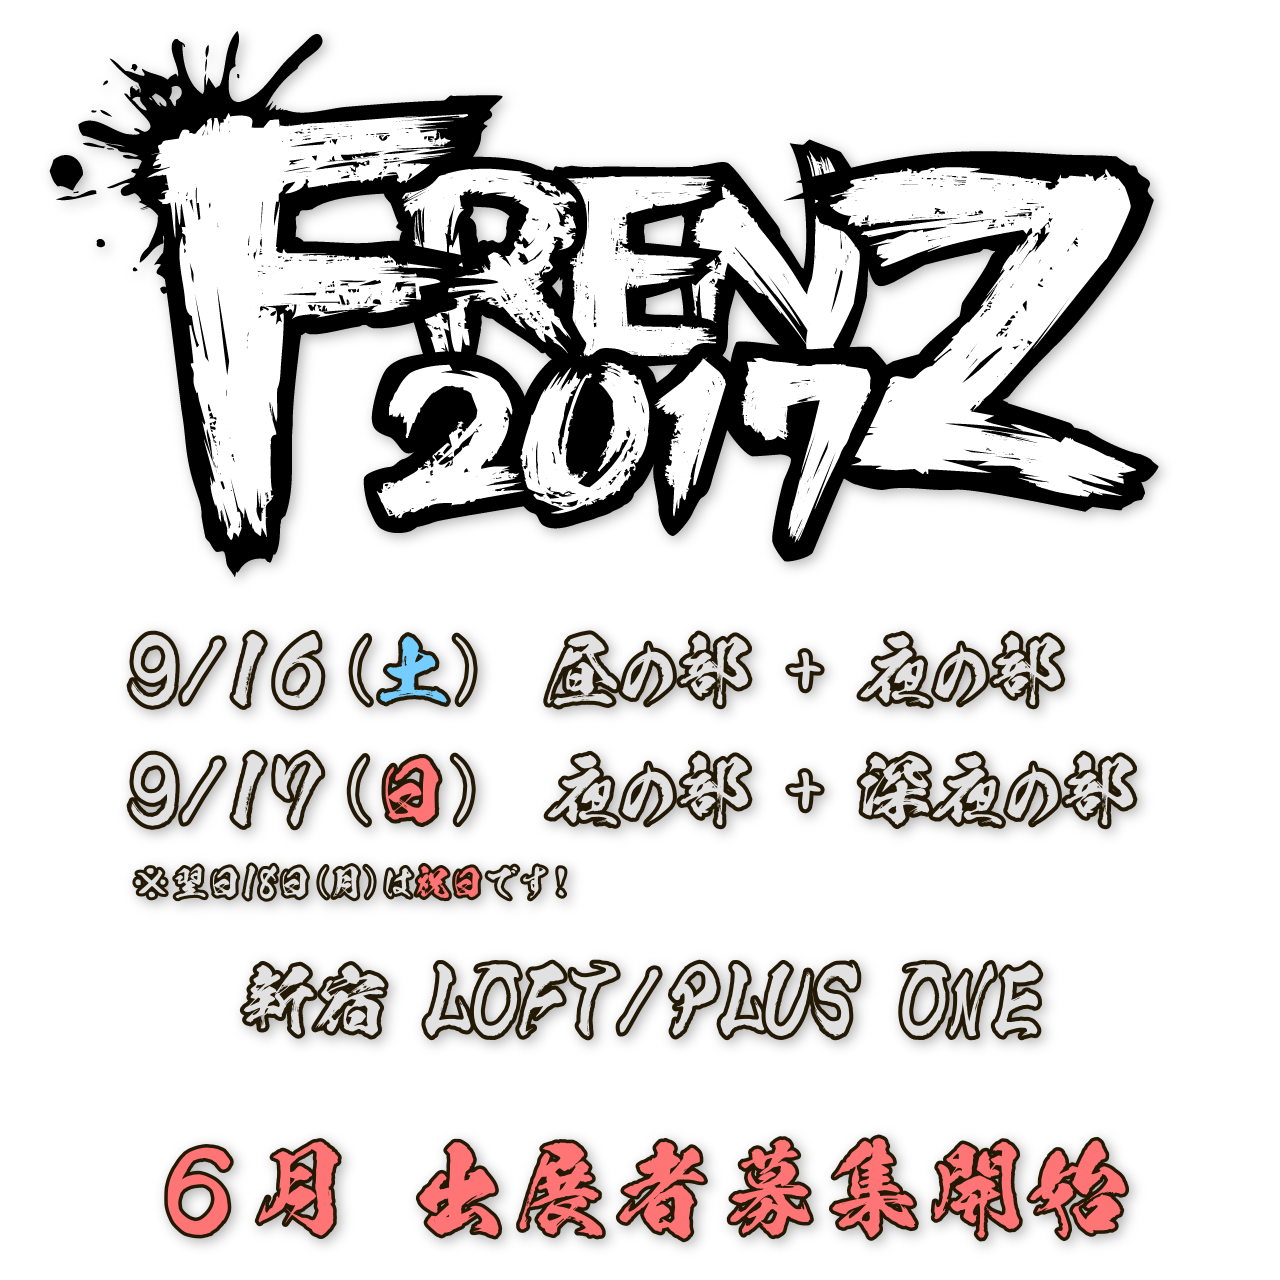 Web上で話題の映像クリエイターによる、新作映像上映イベント『FRENZ 2017』9/16（土）・9/17（日） 新宿LOFT/PLUS ONE にて開催！